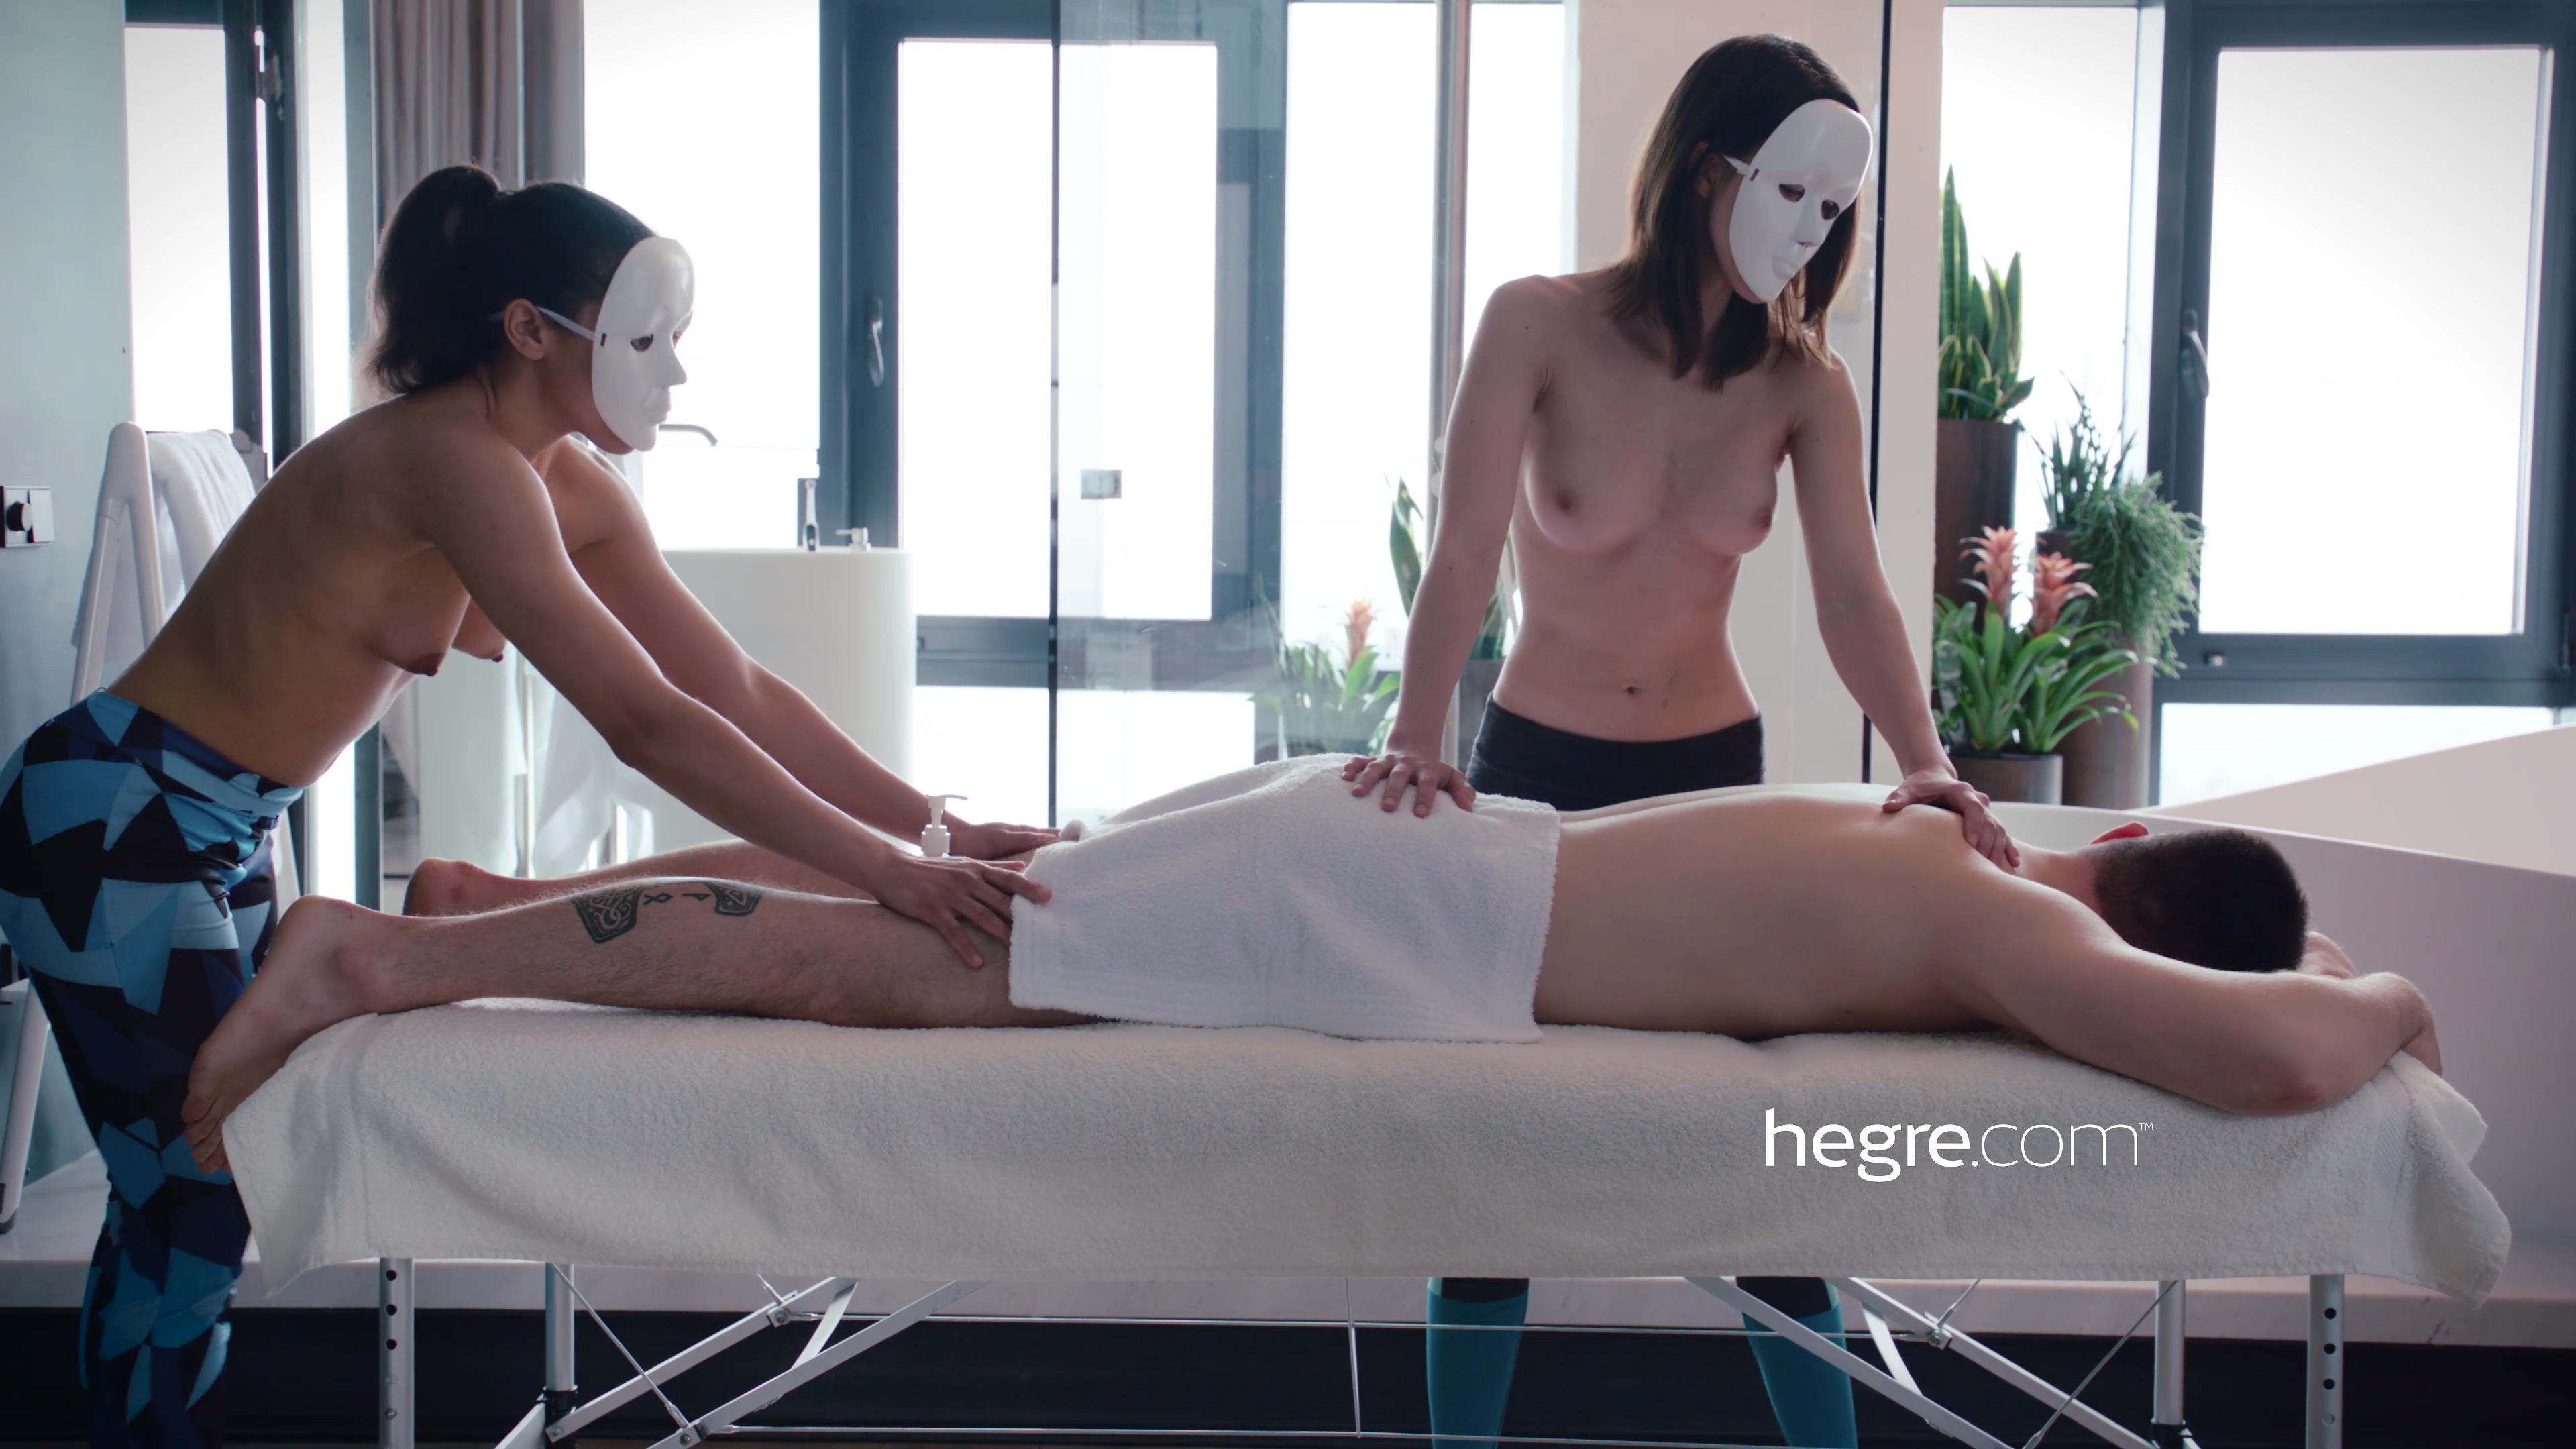 4 Hands Erotic Massage - Hegre - Four Hands Masked Lingam Massage